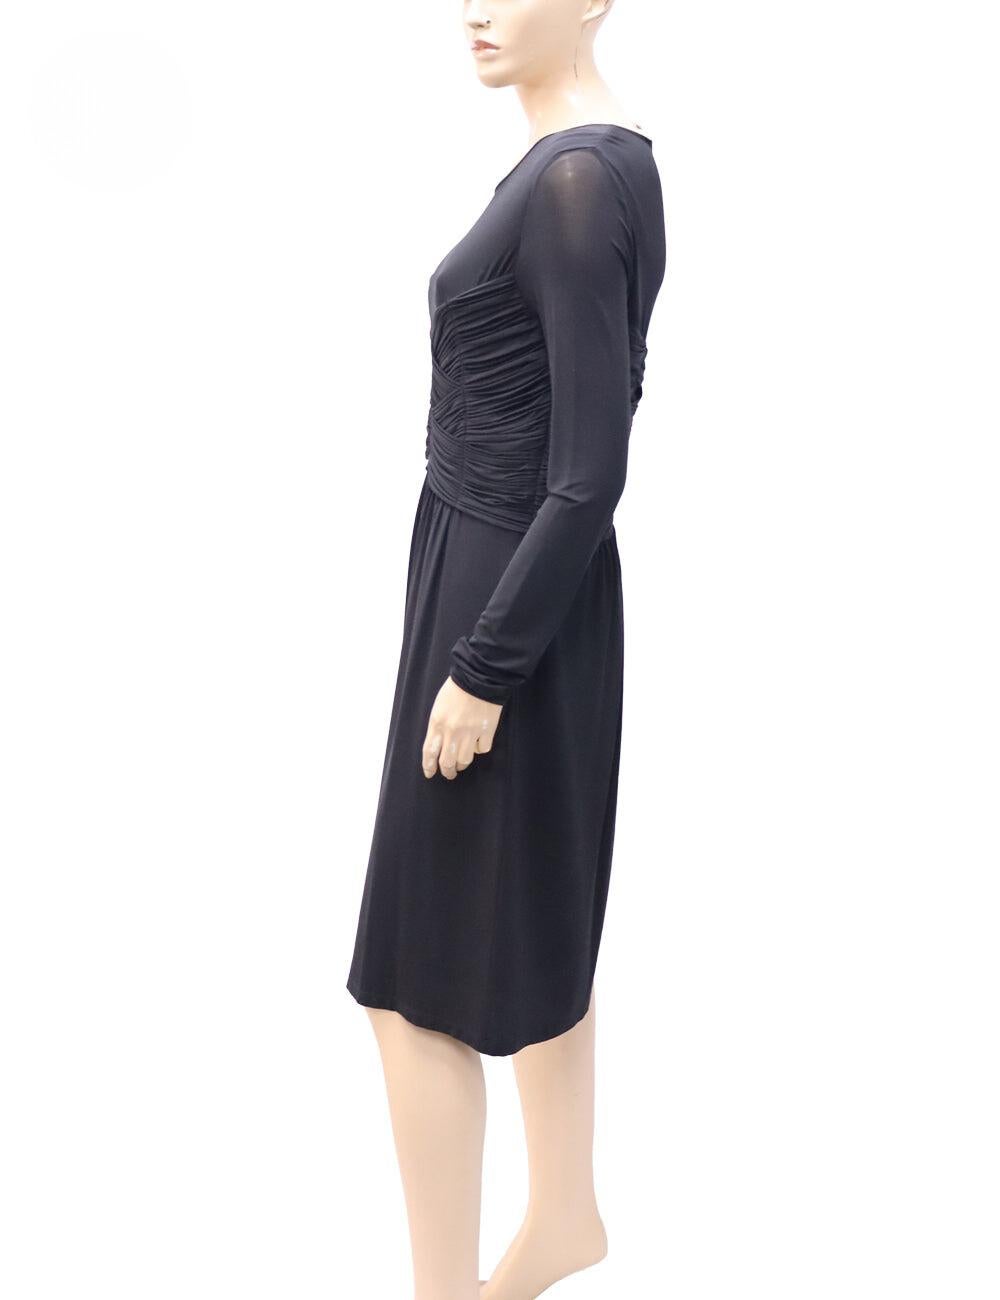 Burberry Woven Waist Classic Black Long Sleeved Midi Dress.

Material: 96% Viscose 4% Elastane
Size: EU 42 / UK 14 / US 12
Bust: 100cm
Waist: 84cm
Hip: 108cm
Condition: Excellent